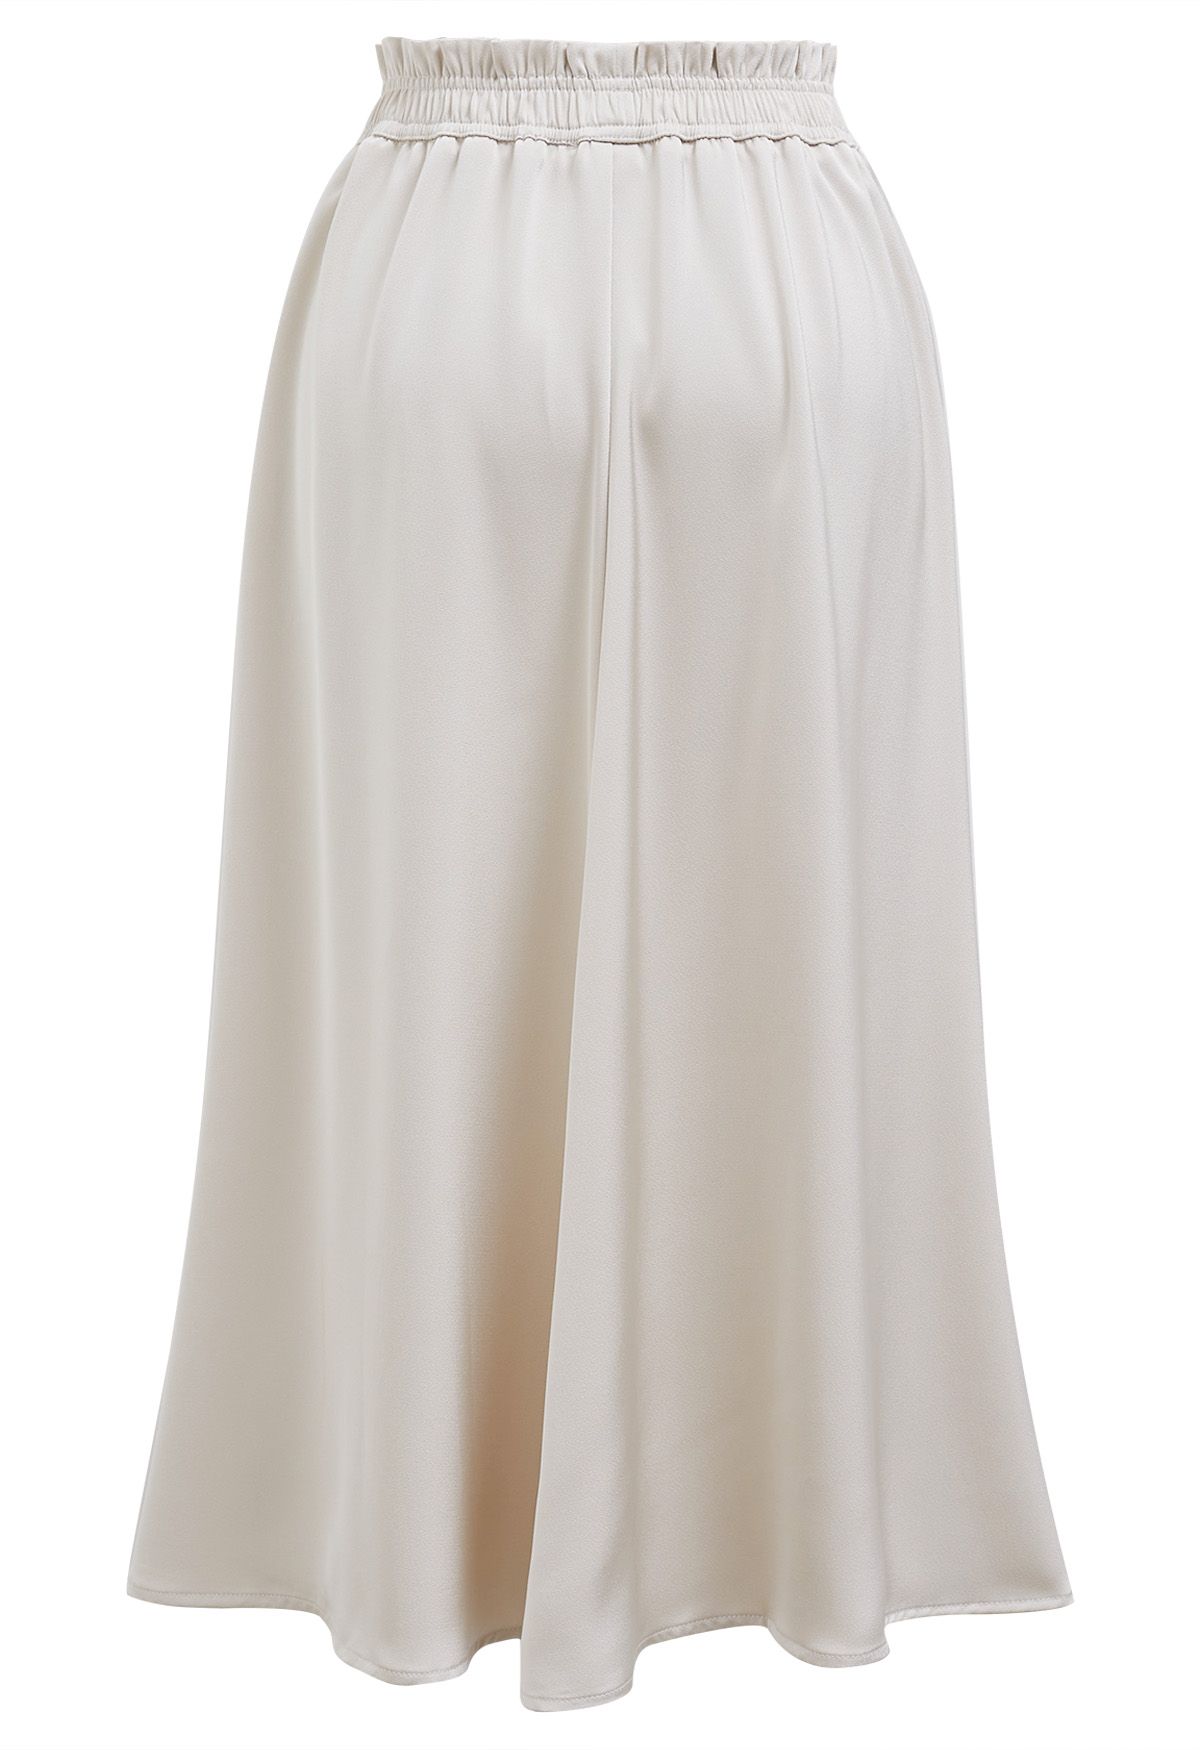 Satin High Waist Midi Skirt in Ivory